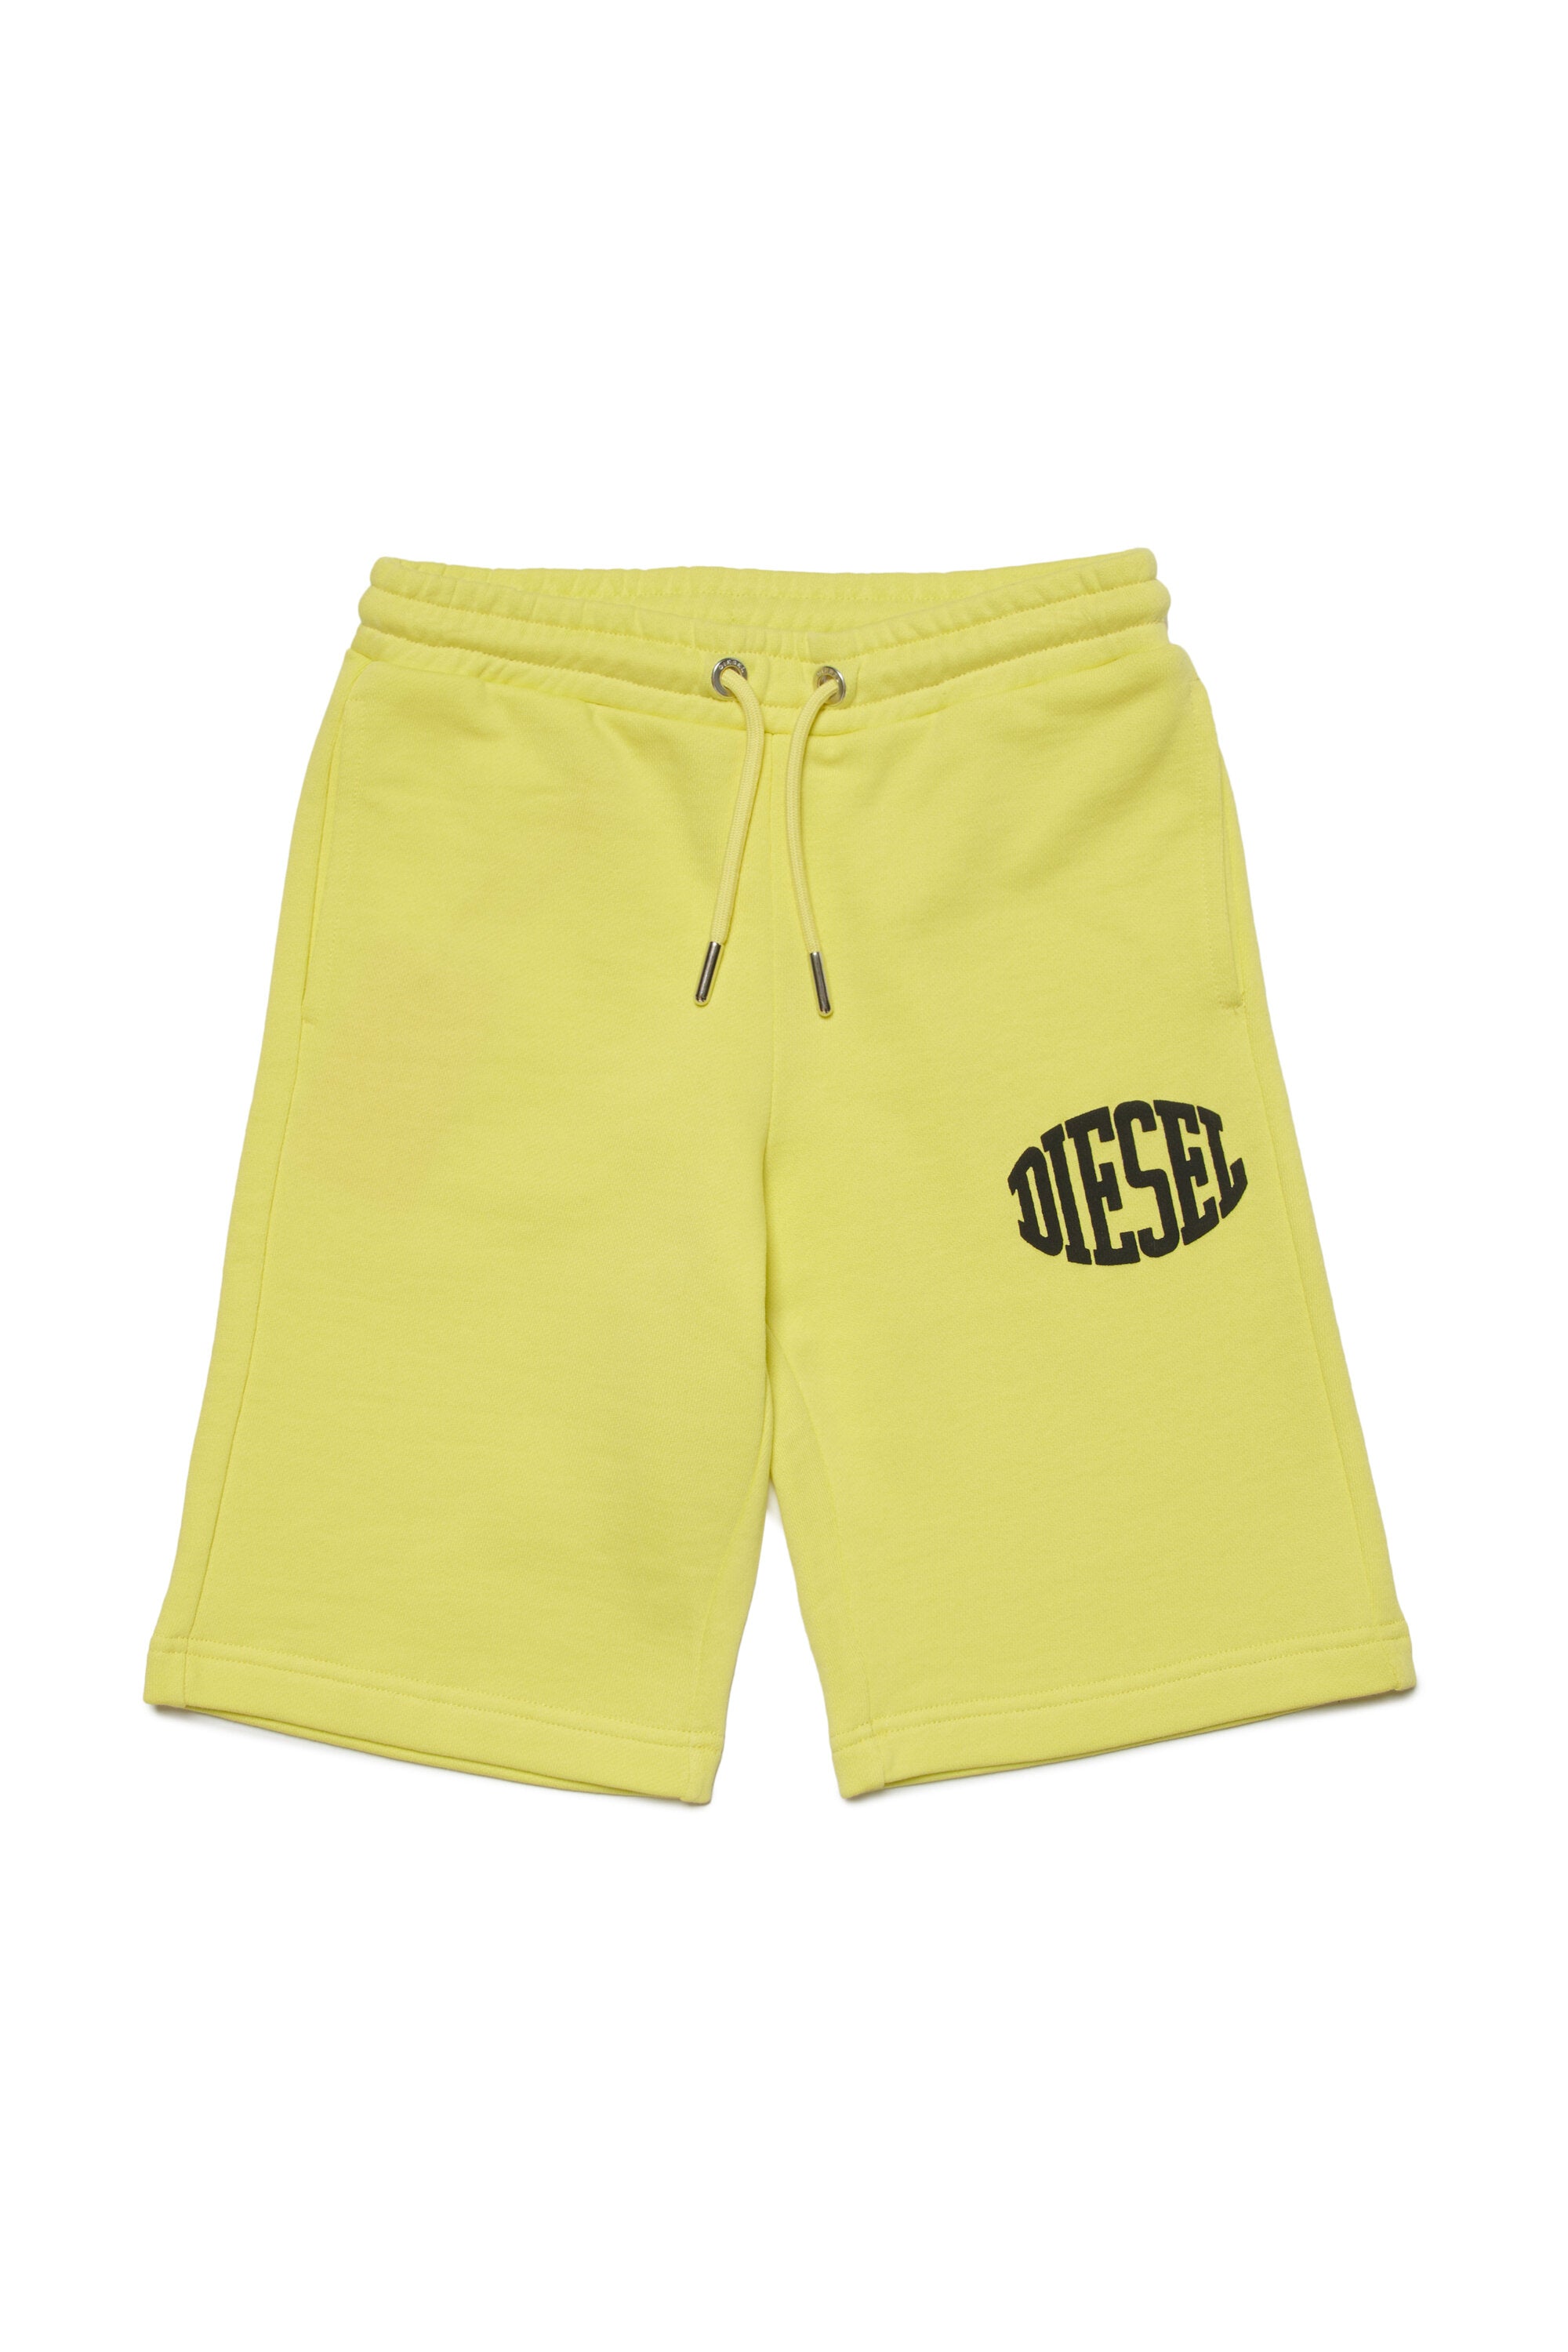 Diesel Kids Oval-D fleece cotton shorts - Yellow